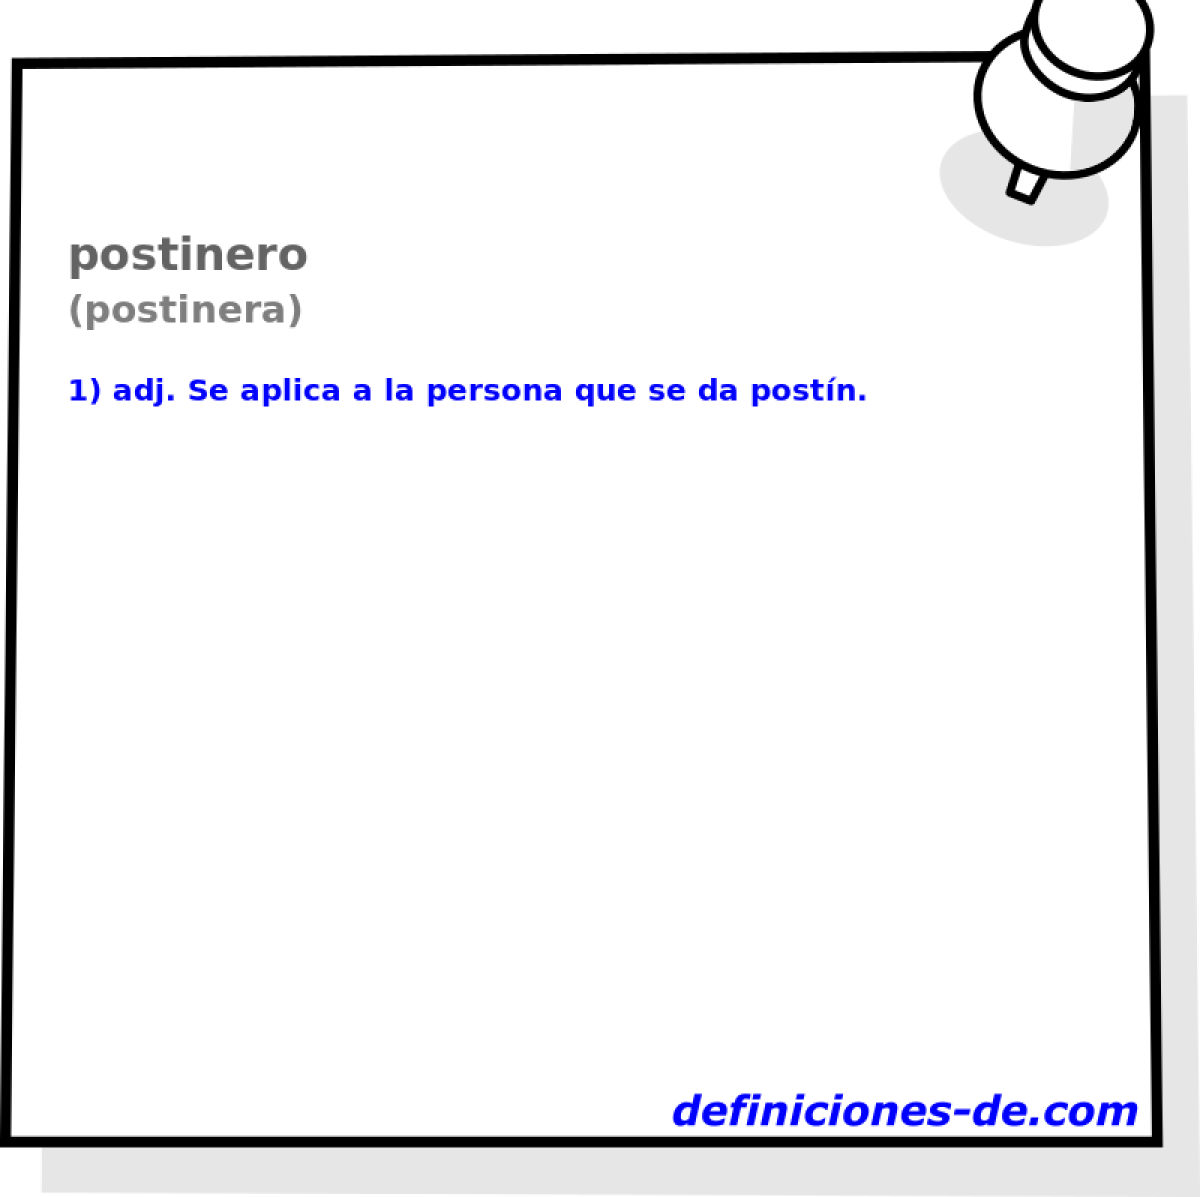 postinero (postinera)